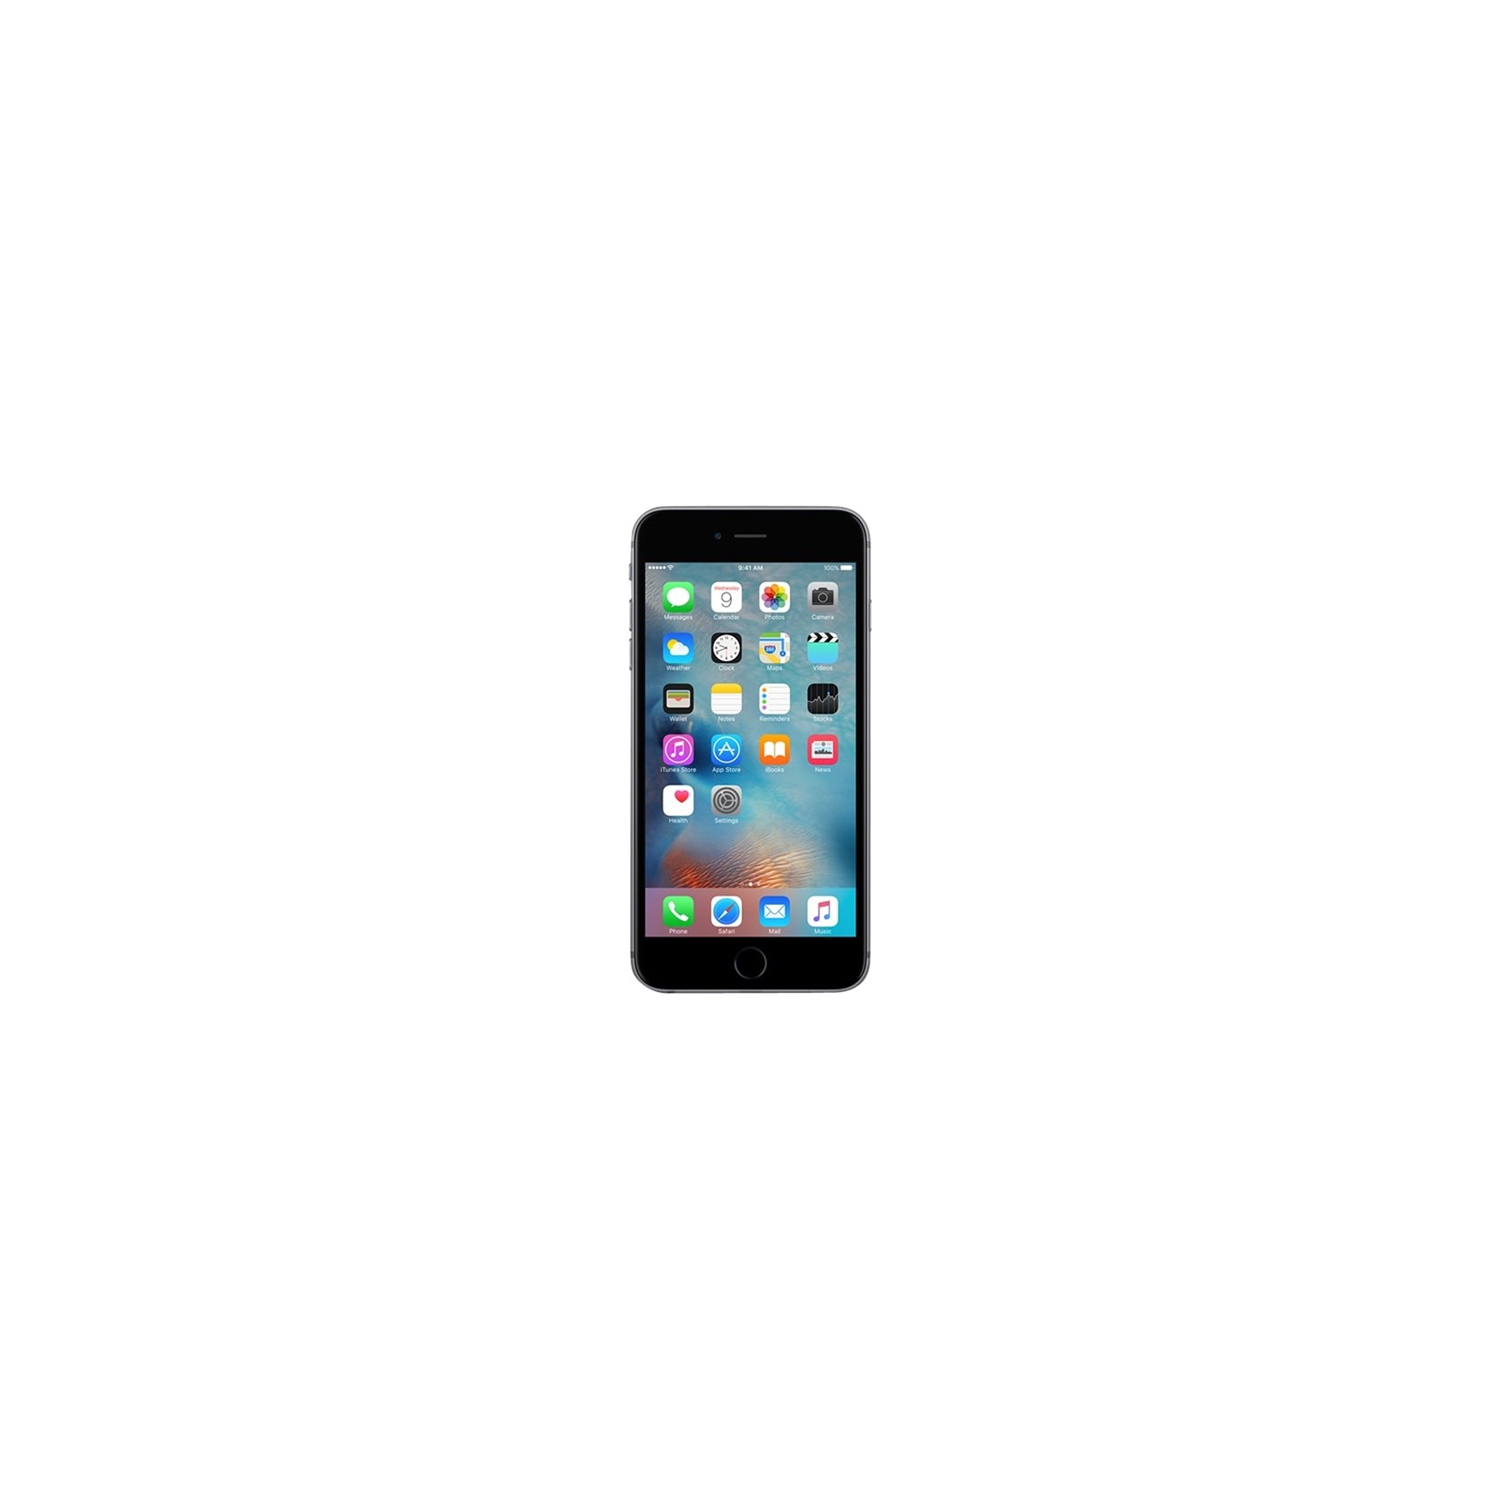 Refurbished (Excellent) - Apple iPhone 6s Plus 32GB Smartphone - Space Gray - Unlocked - Certified Refurbished